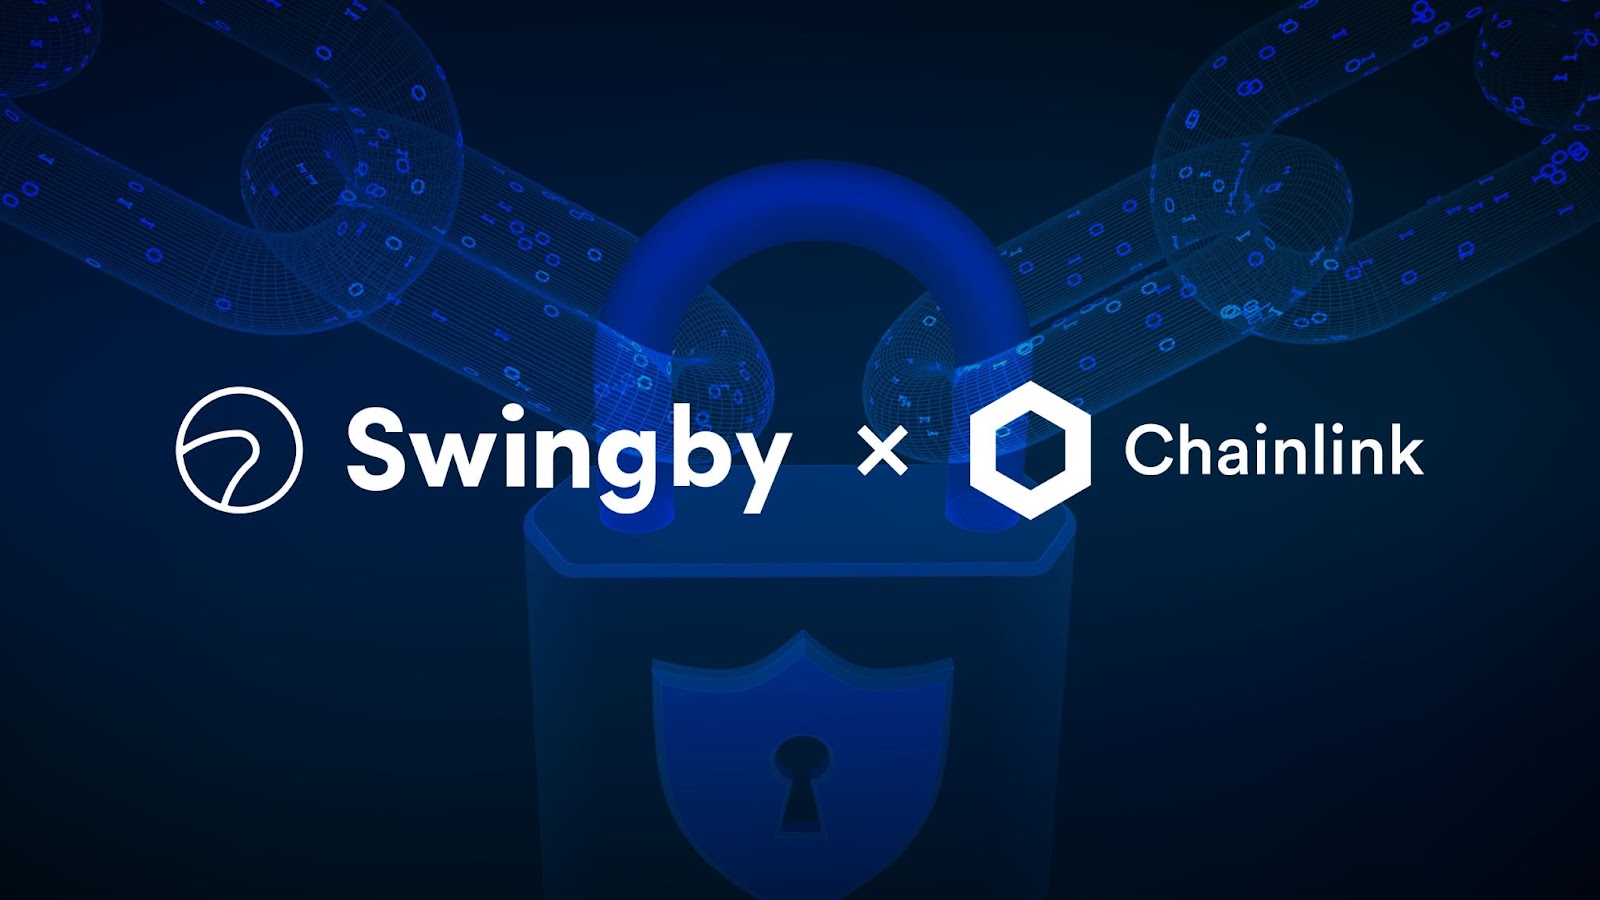 Swingby با Chainlink برای ایمن کردن پل بیت کوین شریک می شود - انتشار مطبوعاتی Bitcoin News